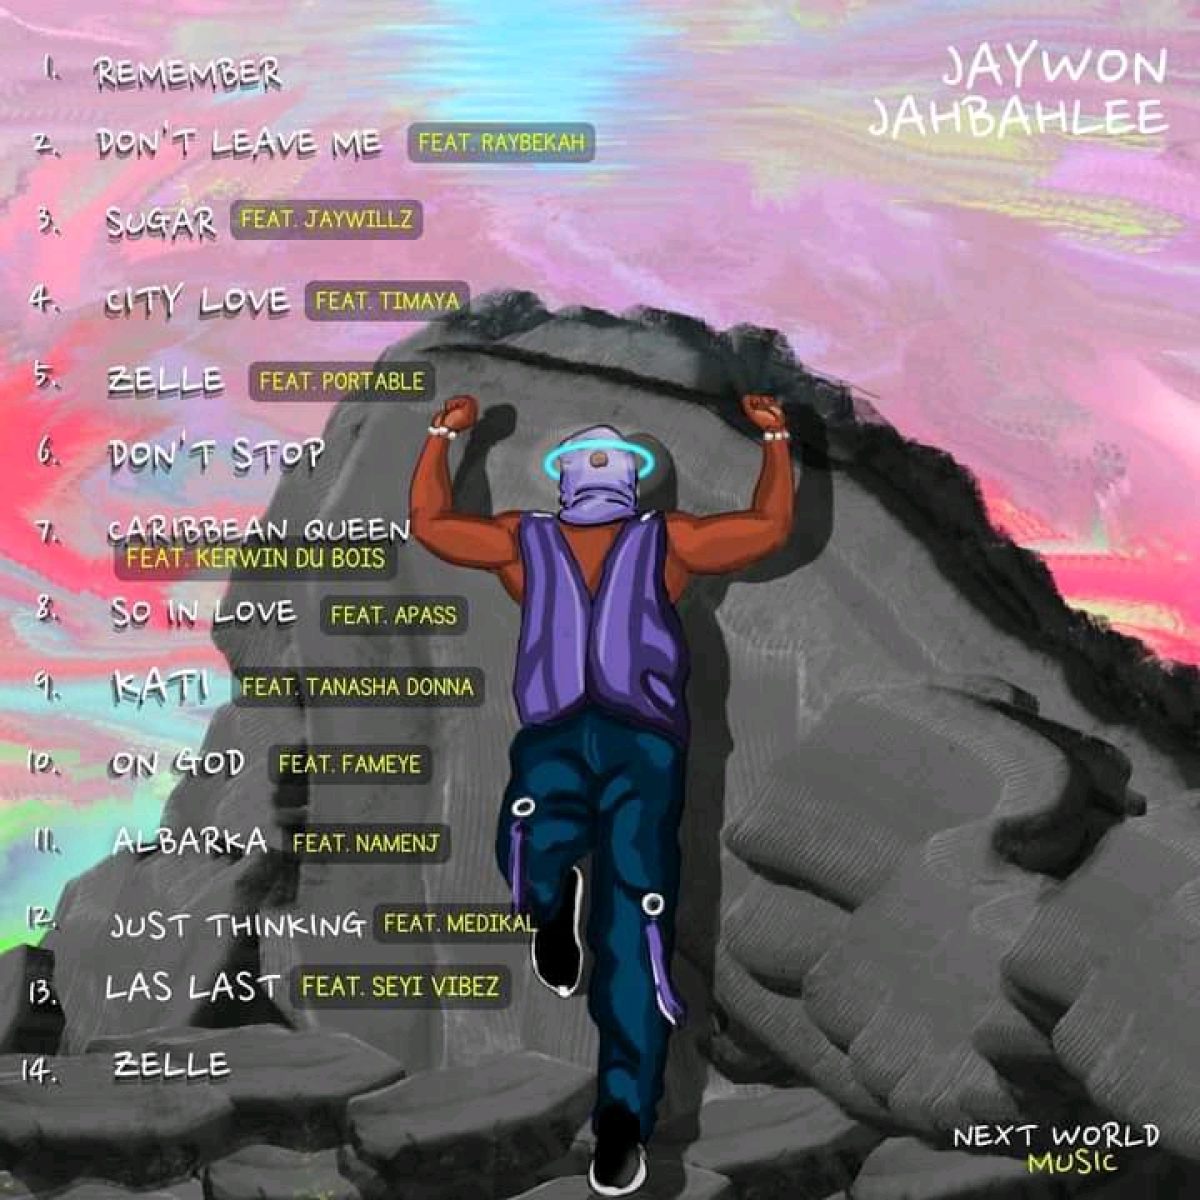 Download MP3: Jaywon – Jahbahlee (Full Album)